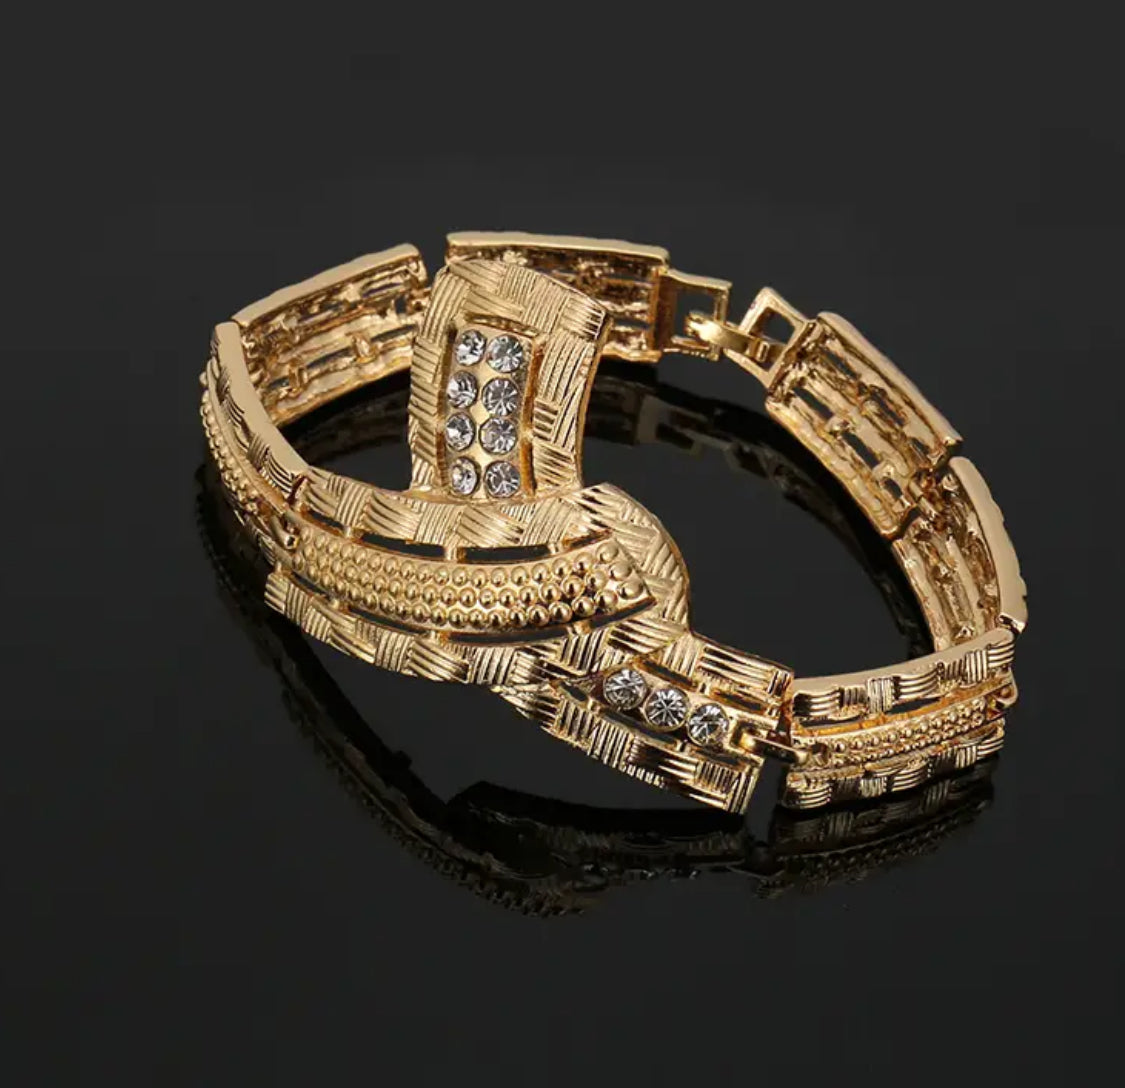 Outstanding (Never Fade) five piece set gold, rhinestone jewelry set.